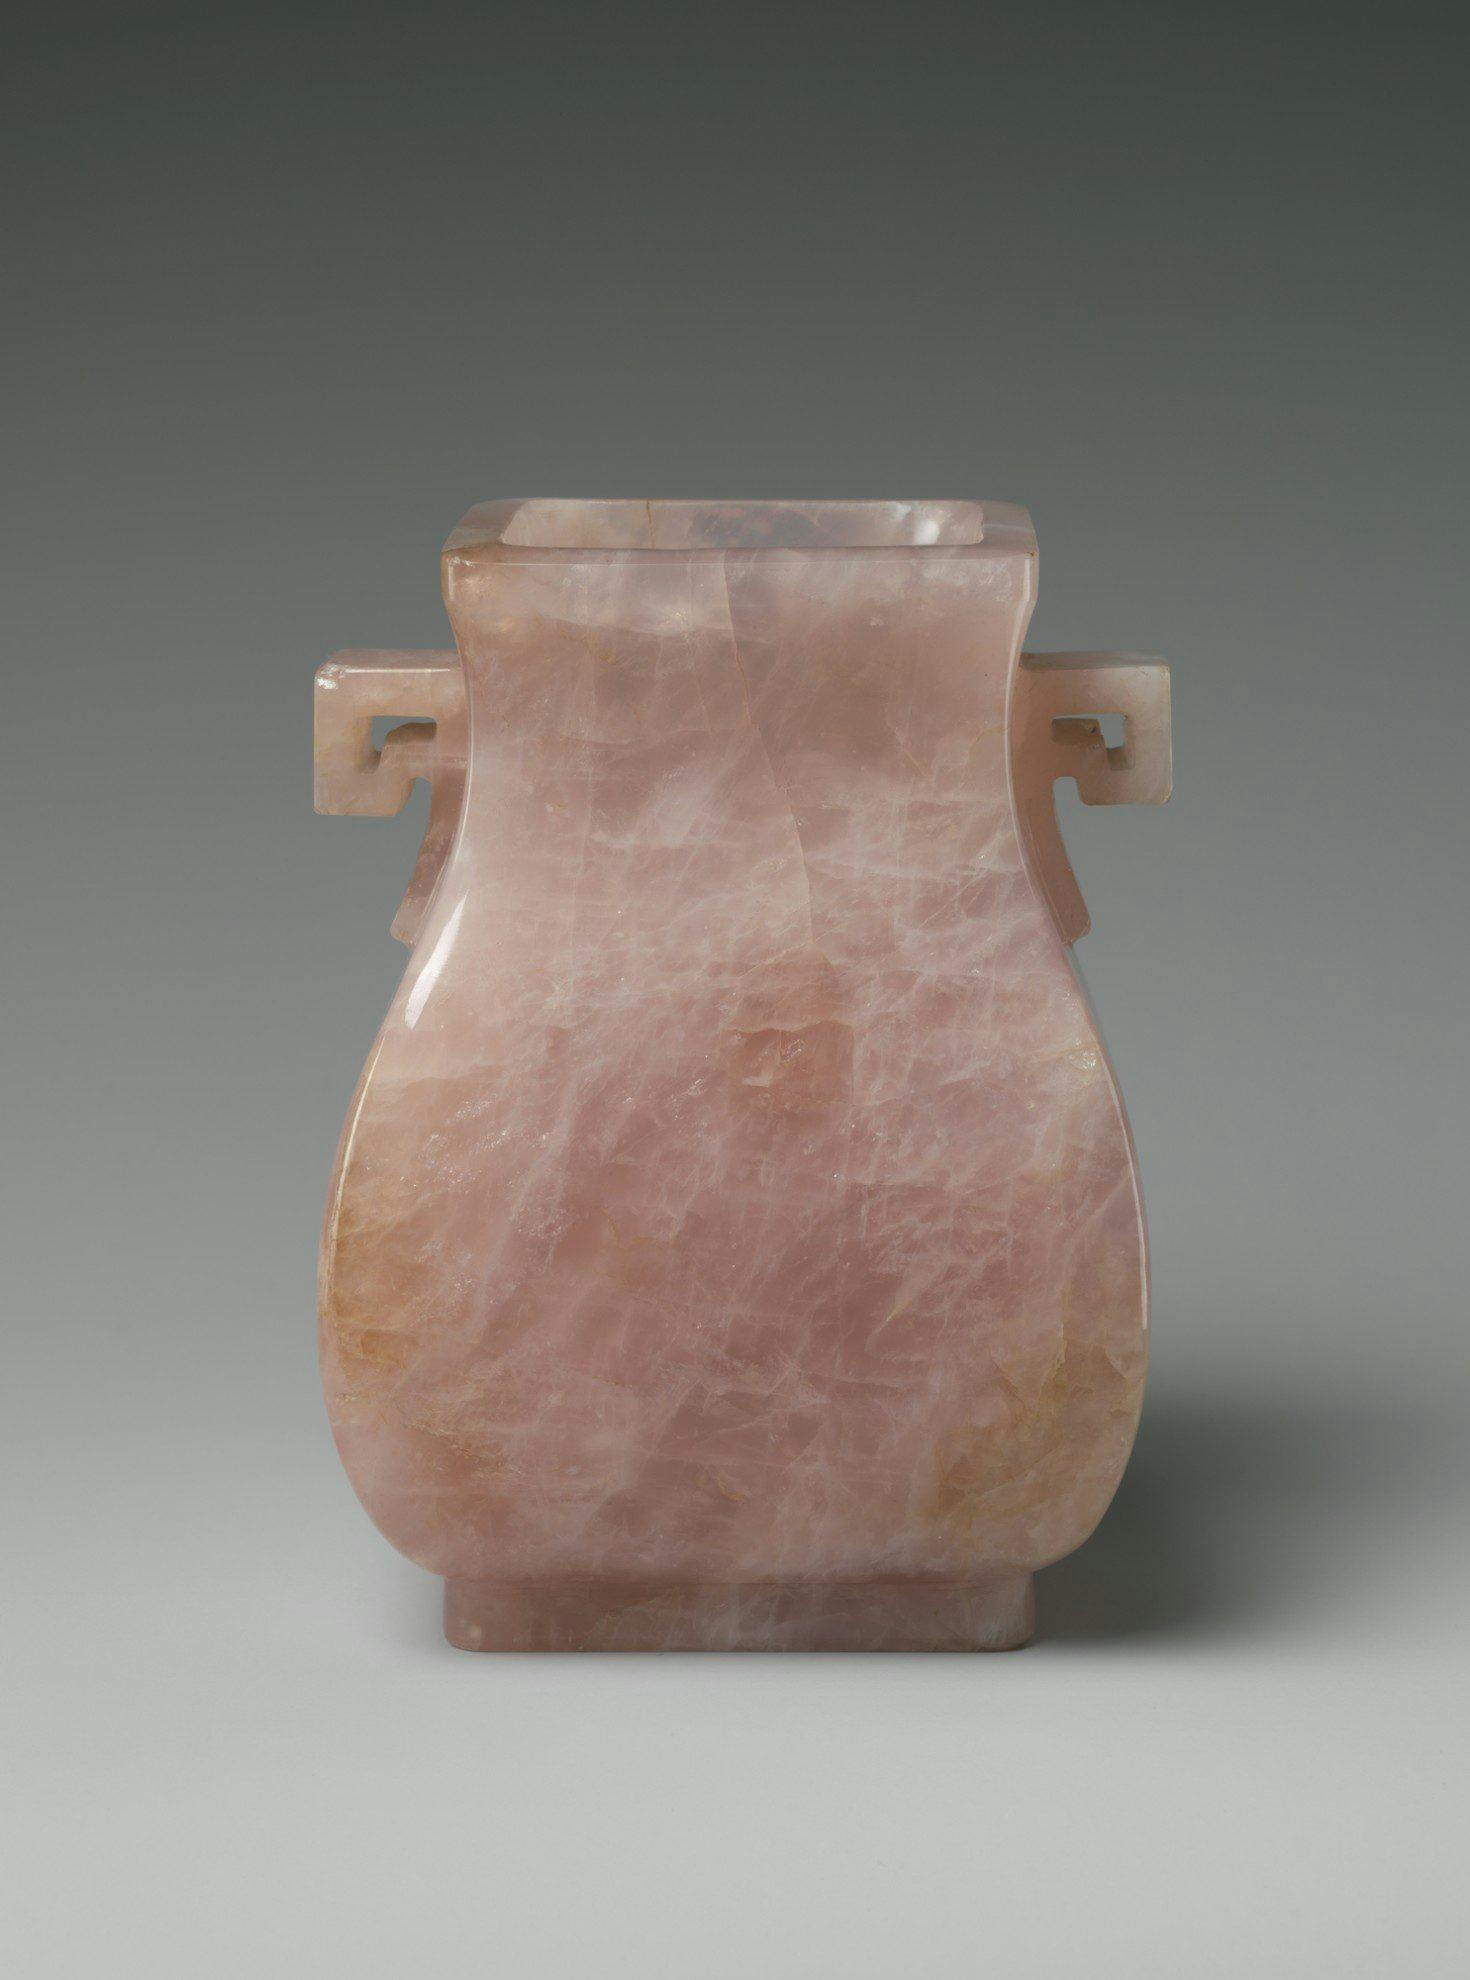 Qing dynasty vase - rose quartz